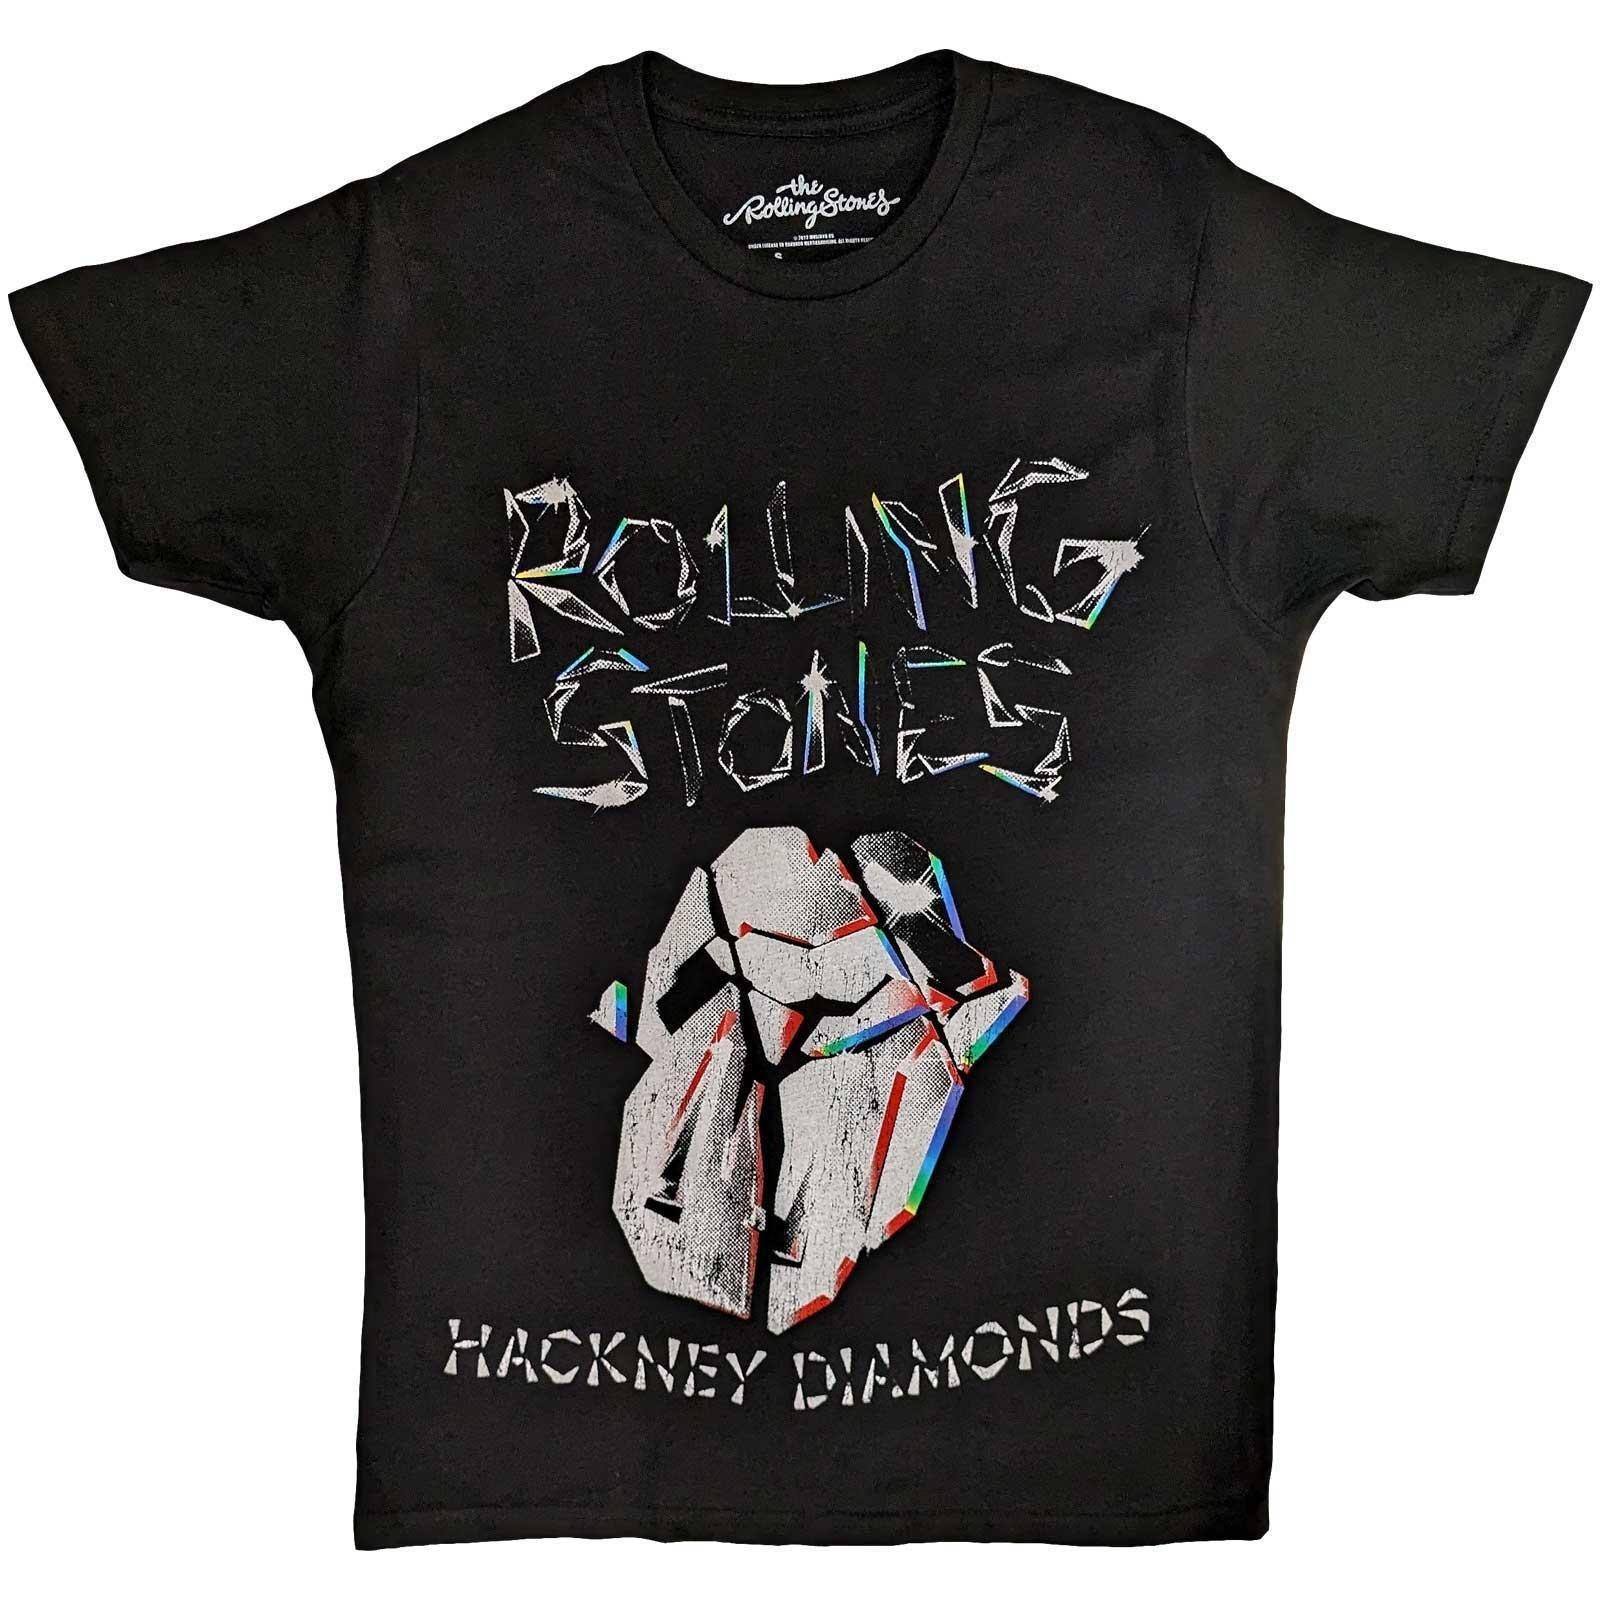 Hackney Diamonds Tshirt Logo Herren Schwarz XL von The Rolling Stones